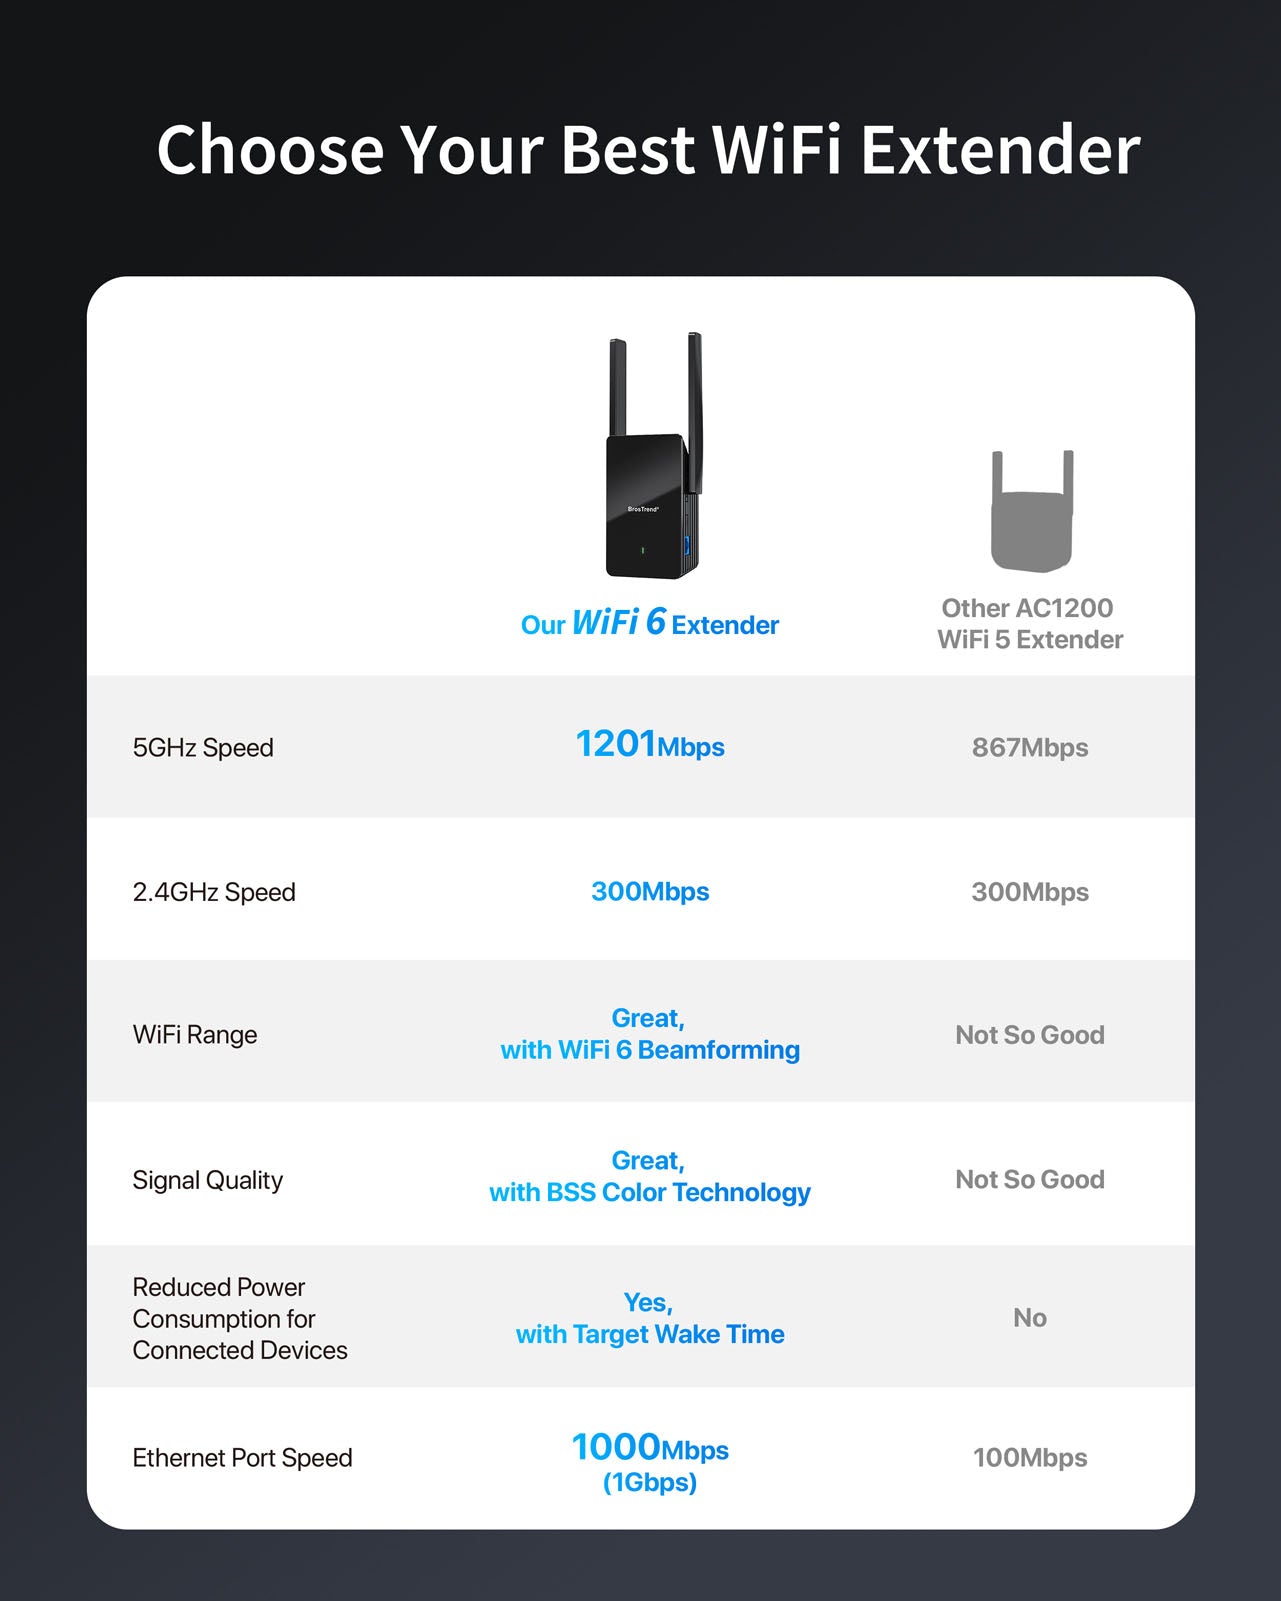 Xiaomi WiFi Extender Pro 300 Mbps Amplificateur WiFi Port Ethernet